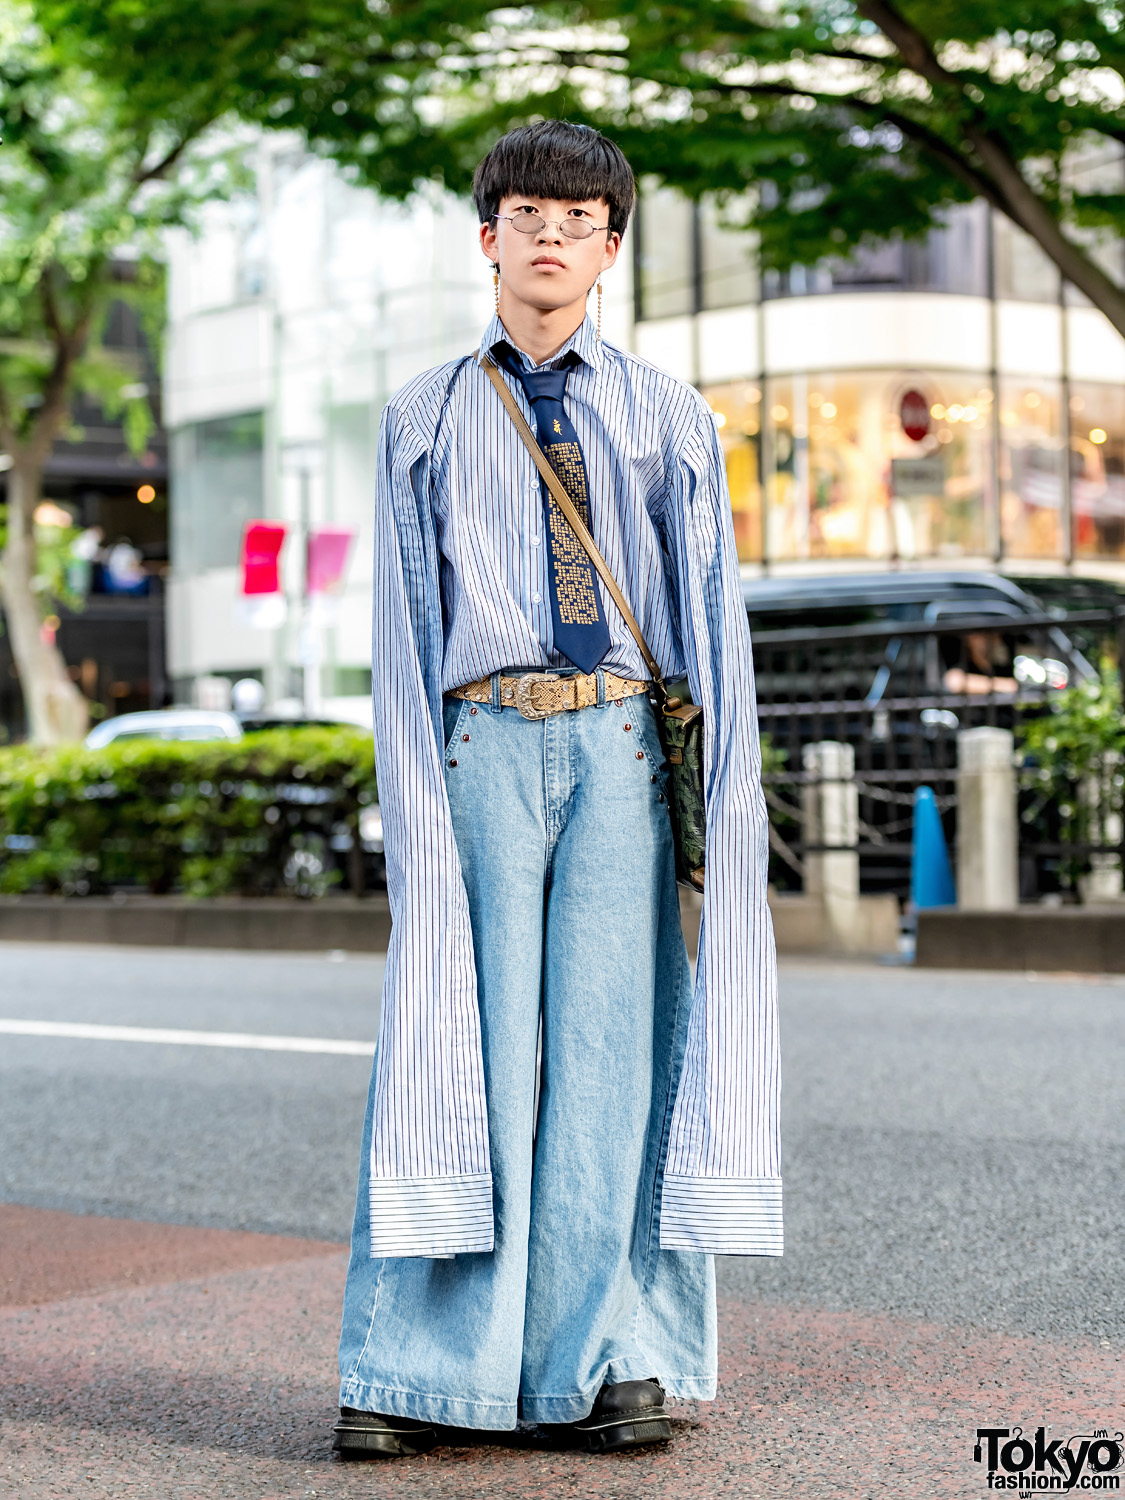 Super Long Sleeves Street Fashion in Harajuku w/ M.Y.O.B Wide Leg Jeans, New Rock Boots & Satchel Bag